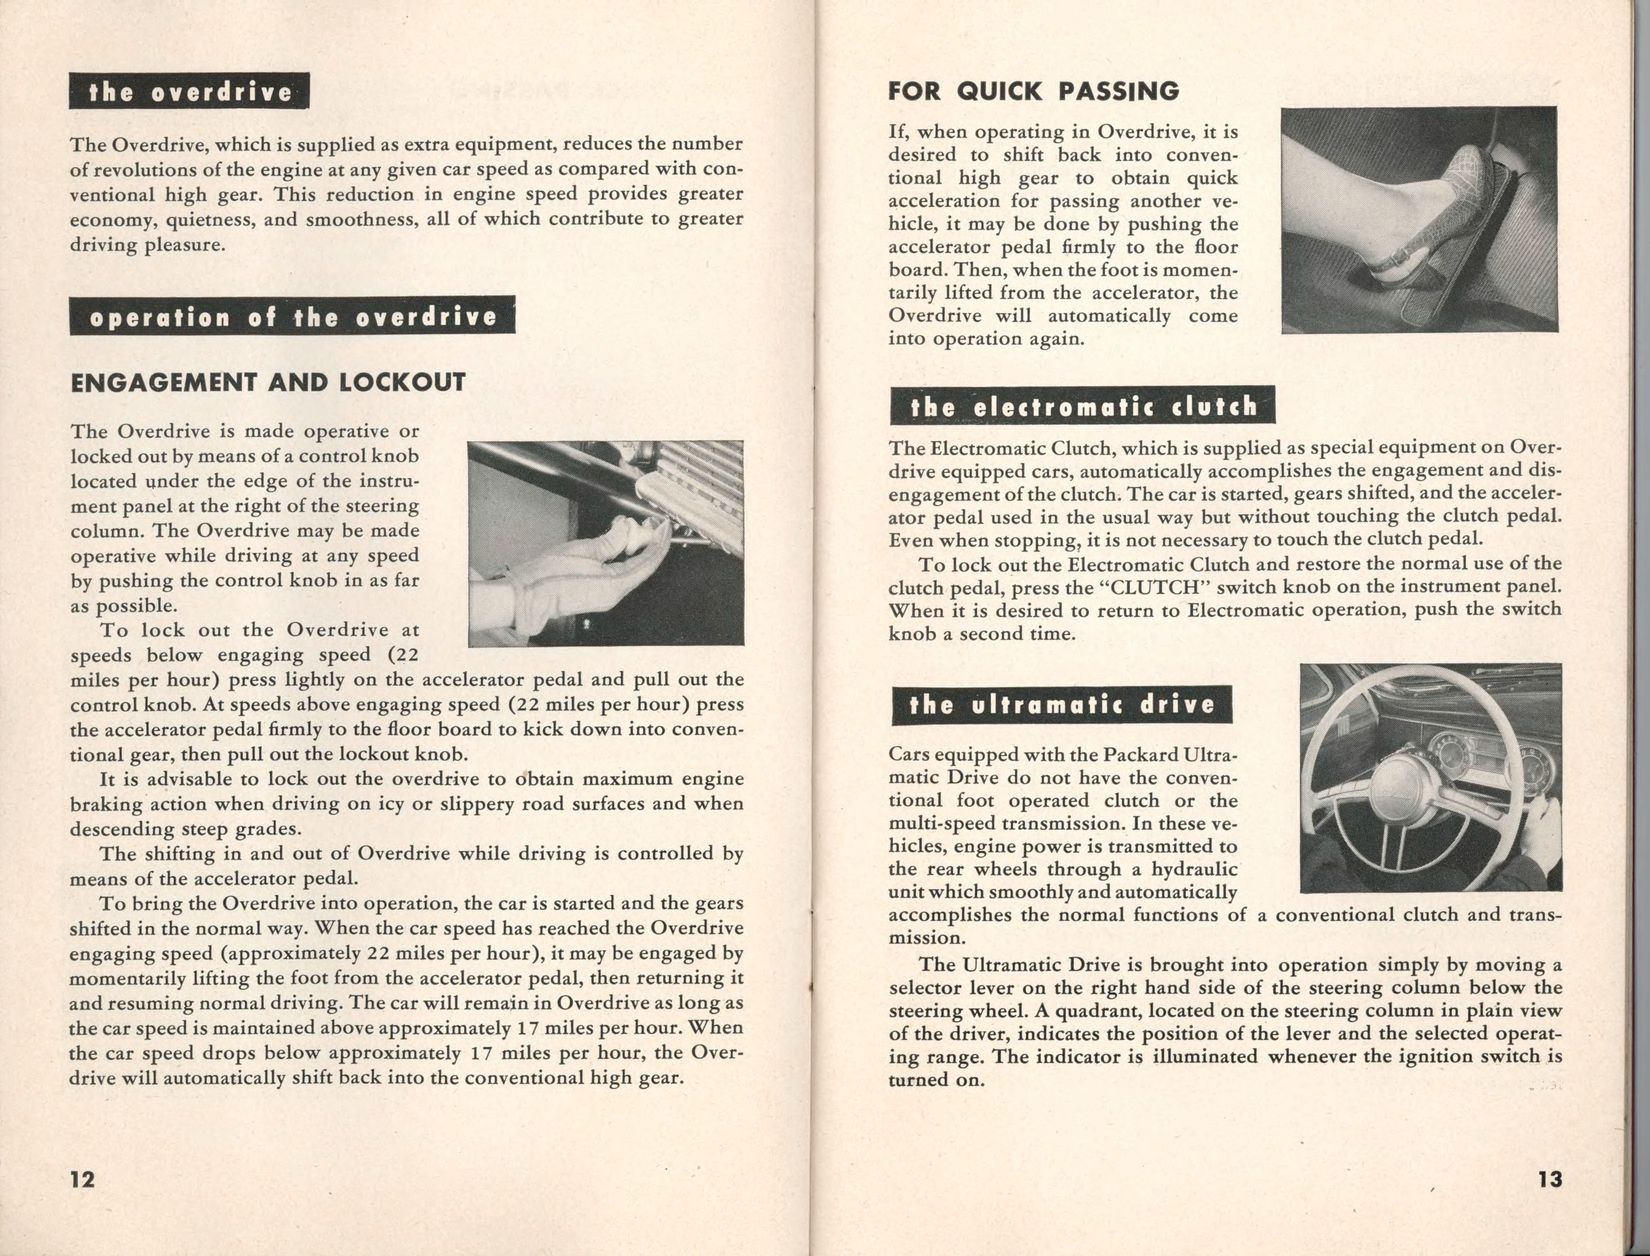 1949 Packard Manual-12-13